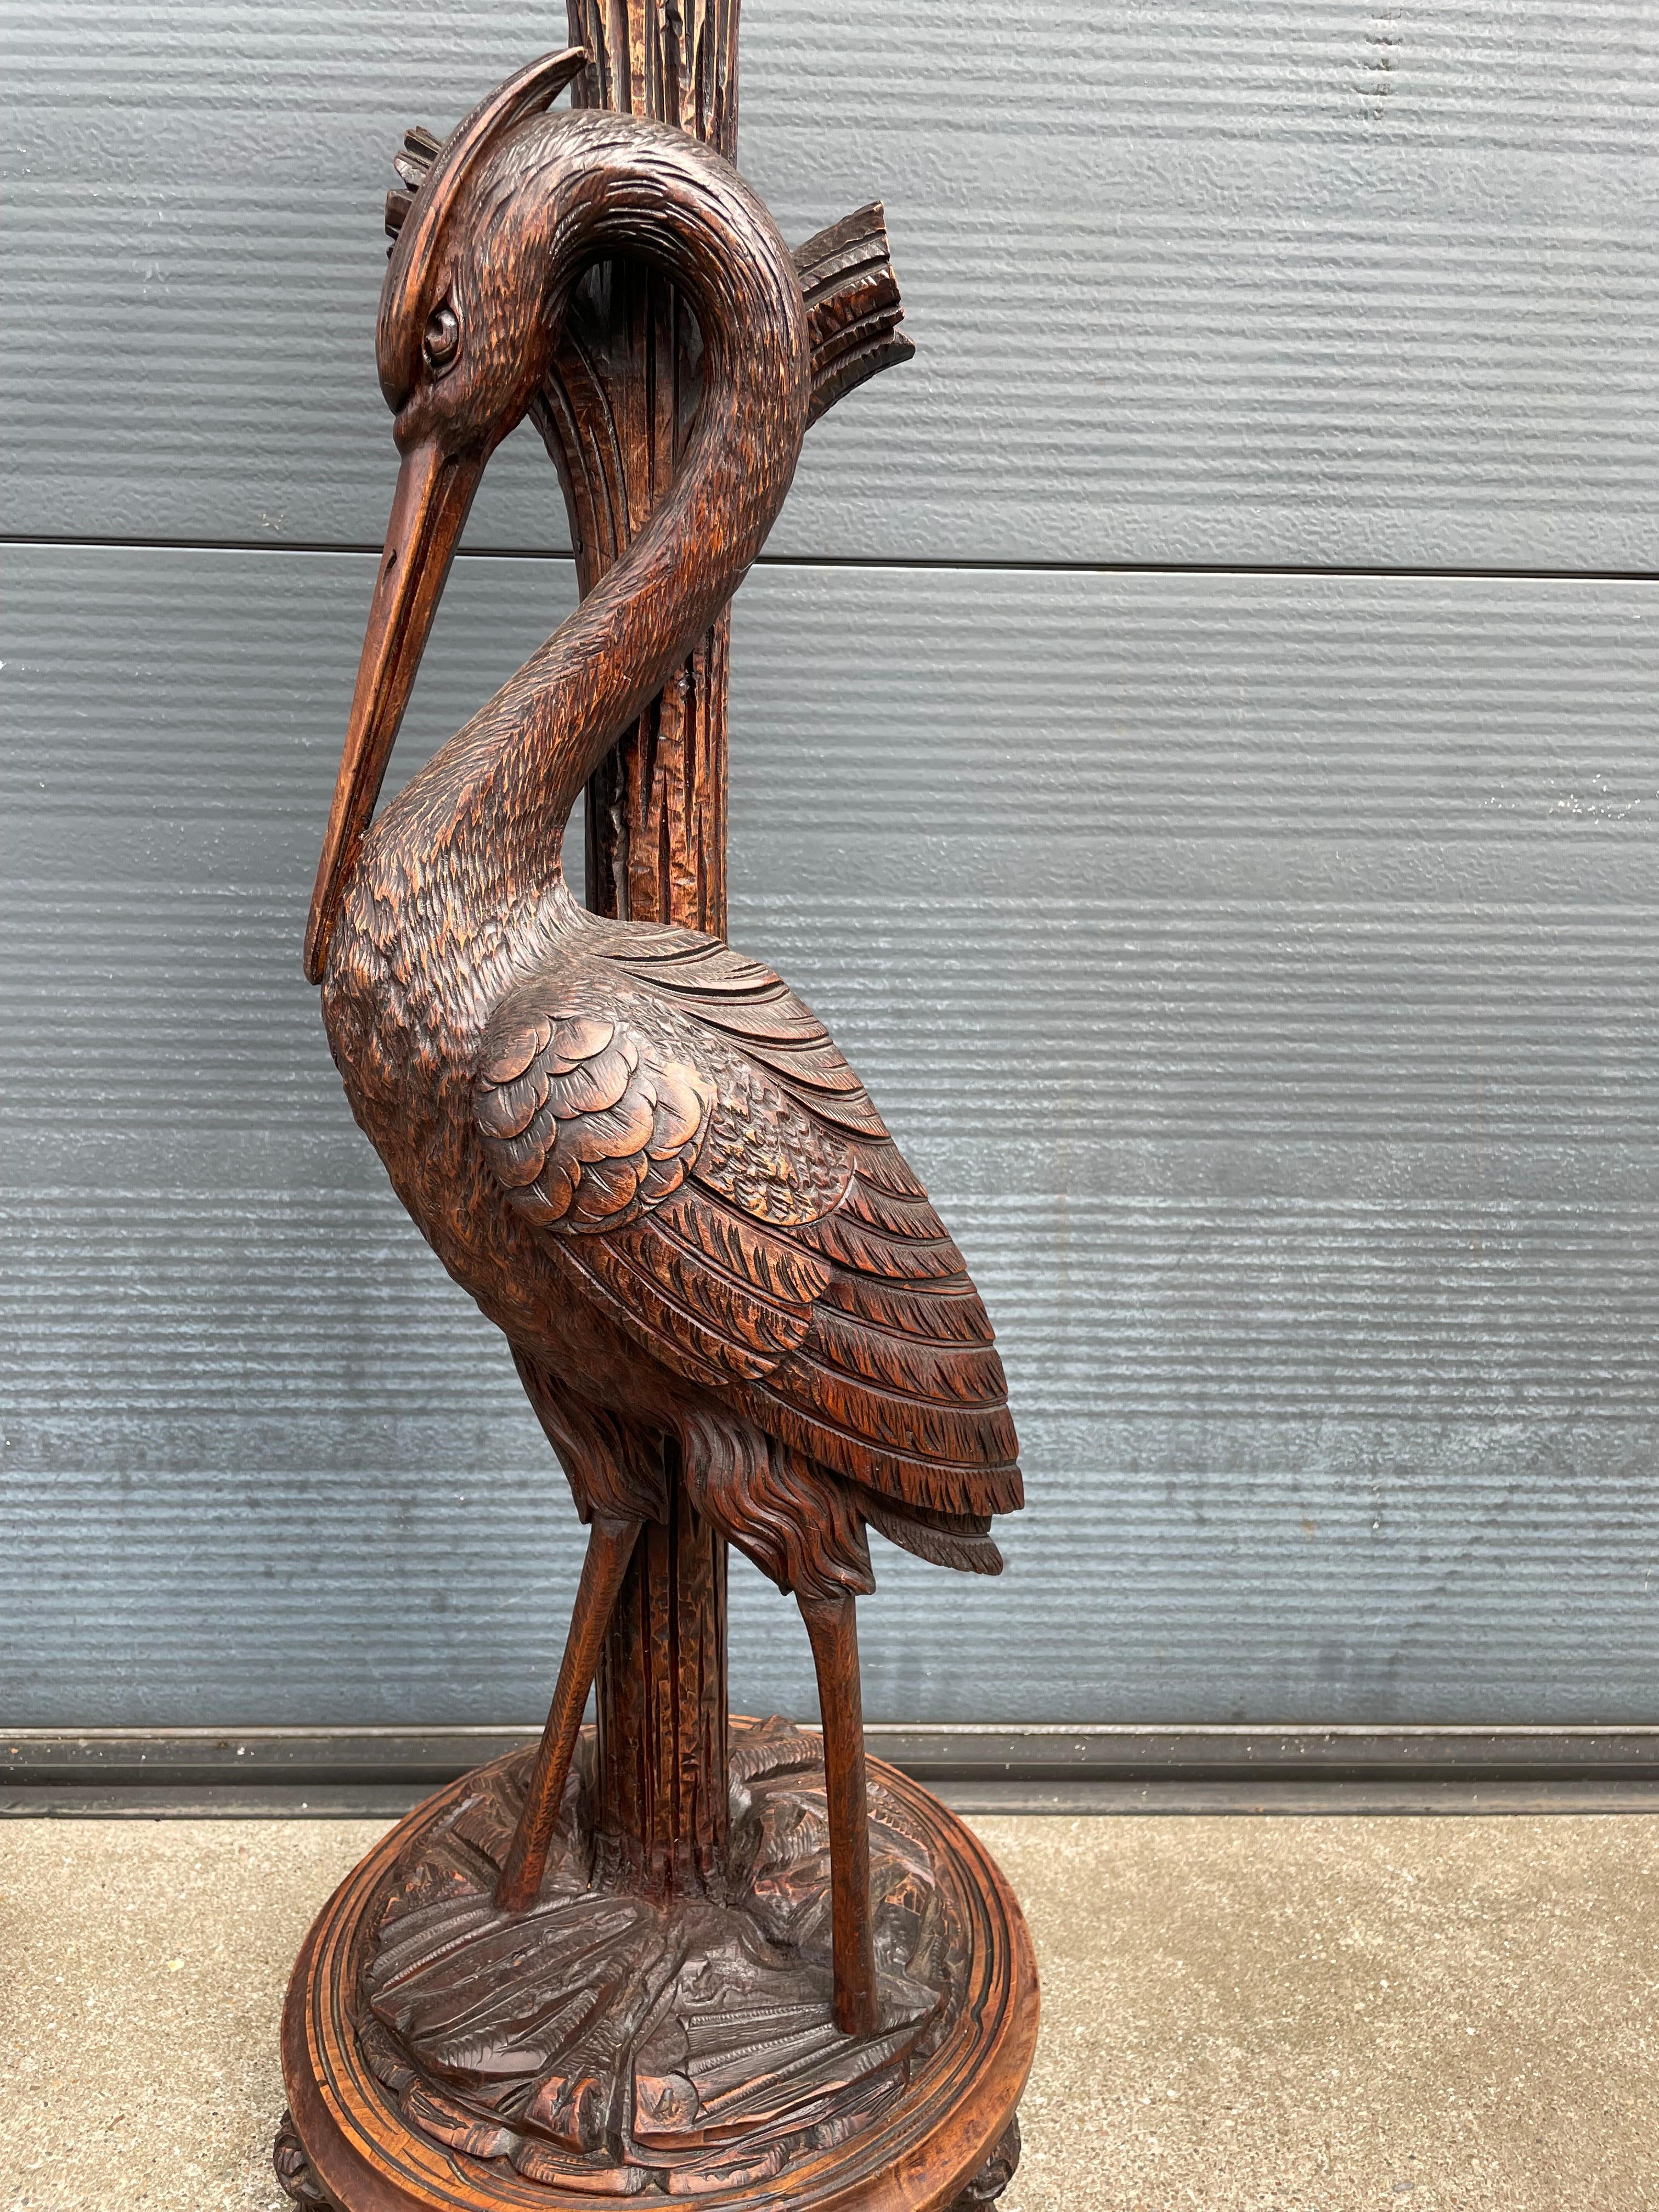 European Antique and Unique Hand Carved Pair of Black Forest Heron Sculpture Pedestals